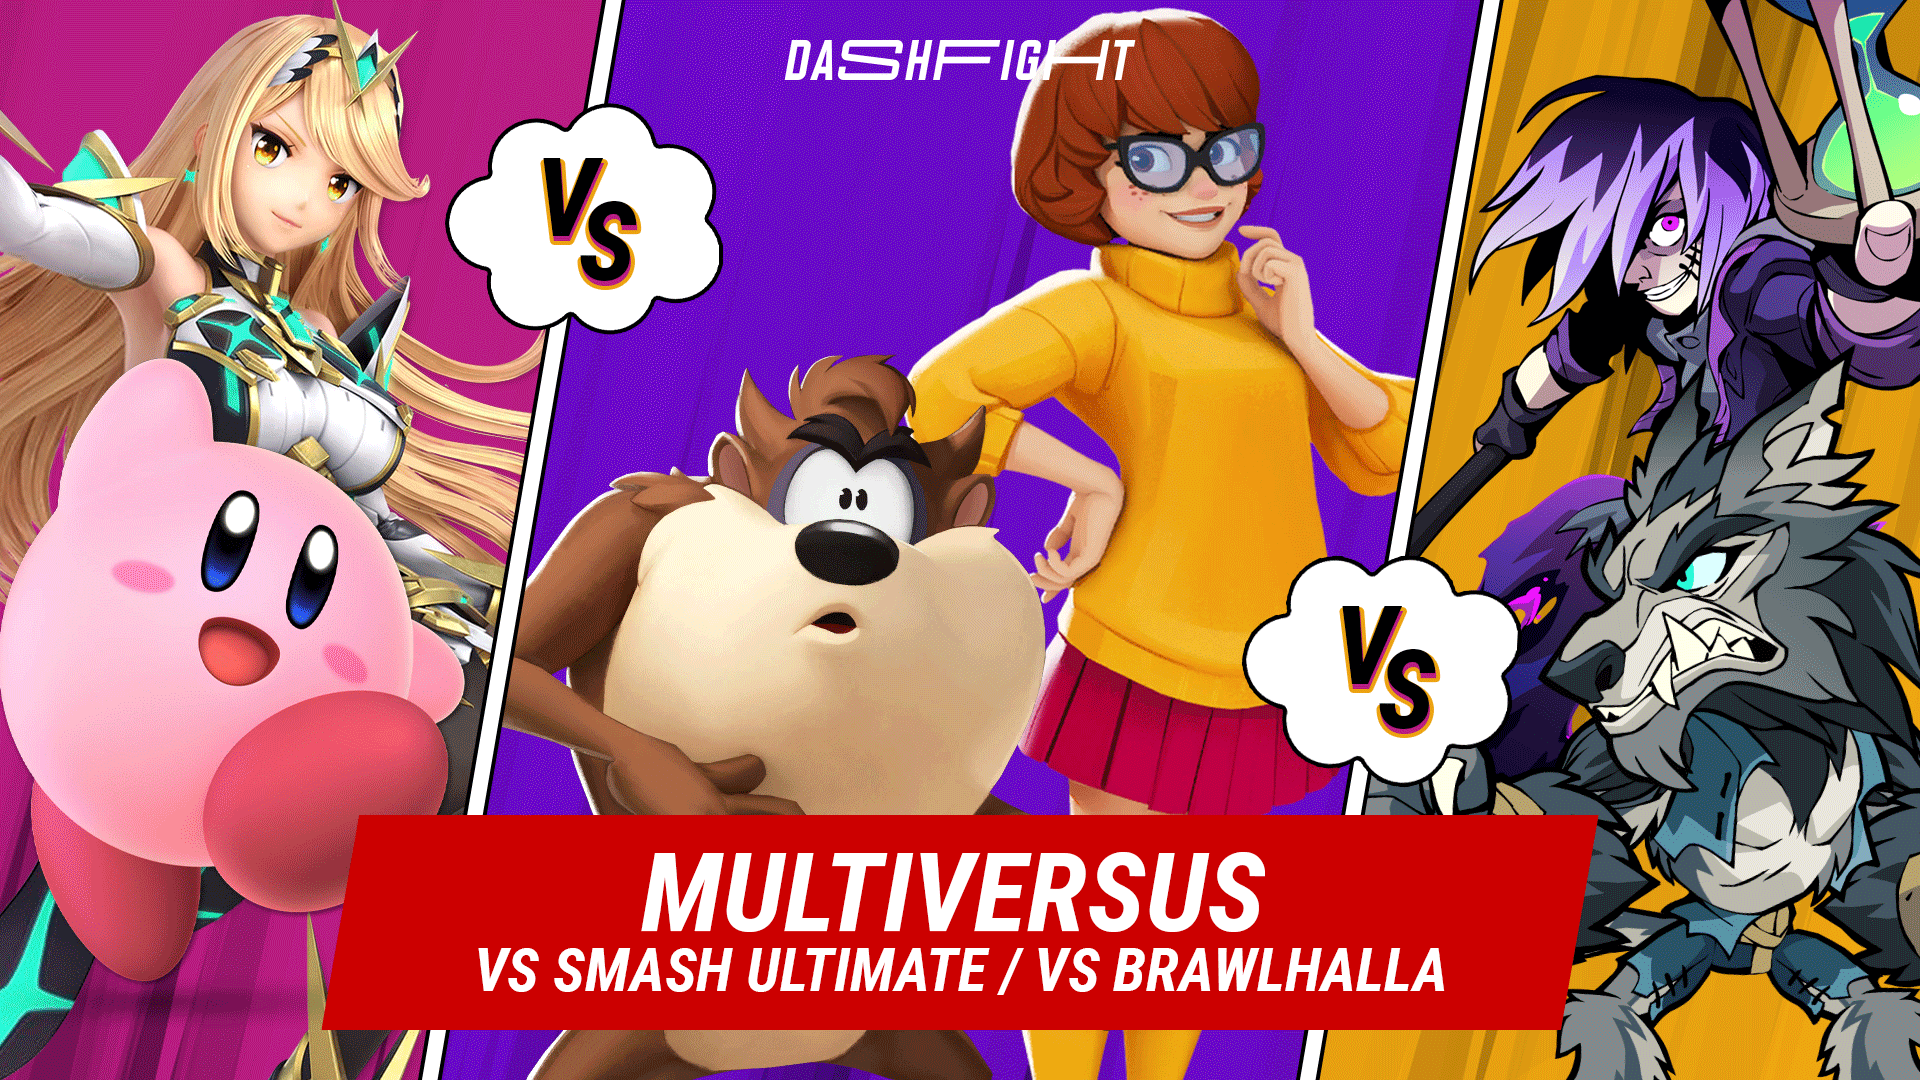 MultiVersus vs Smash Ultimate (and vs Brawlhalla)